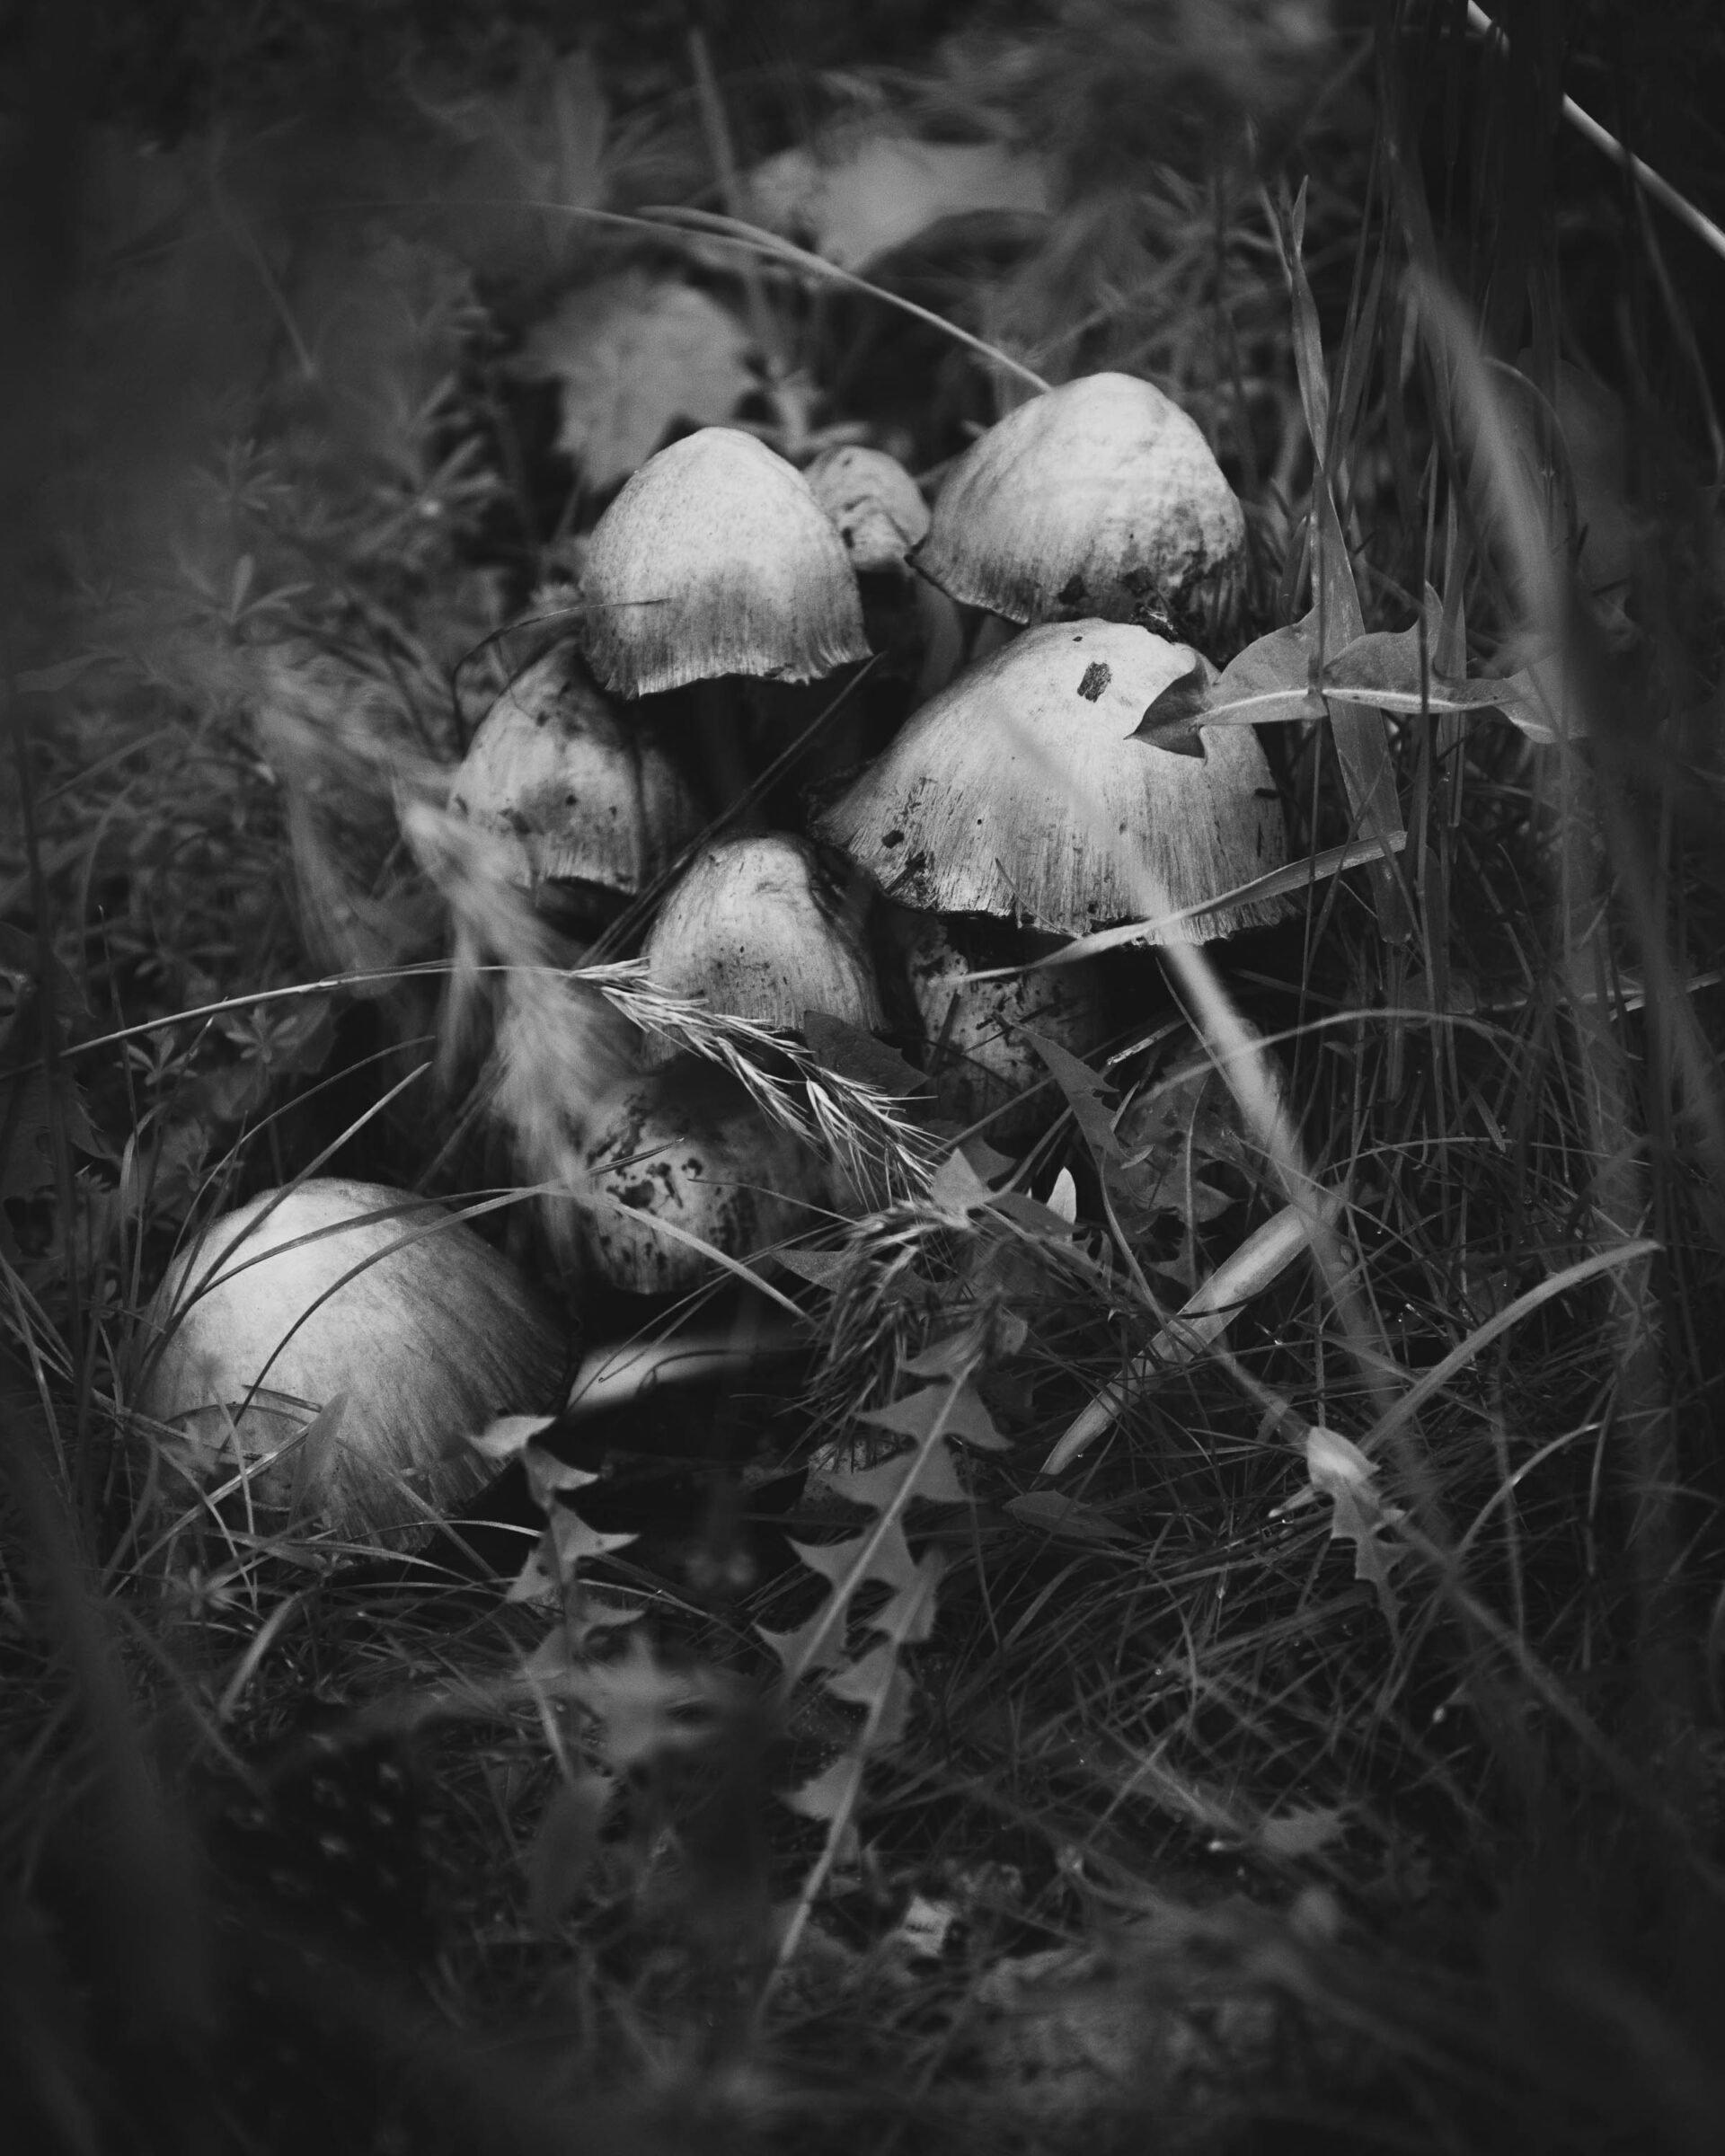 Death Cap Mushrooms growing beside a tree stump emerge after a heavy rain.